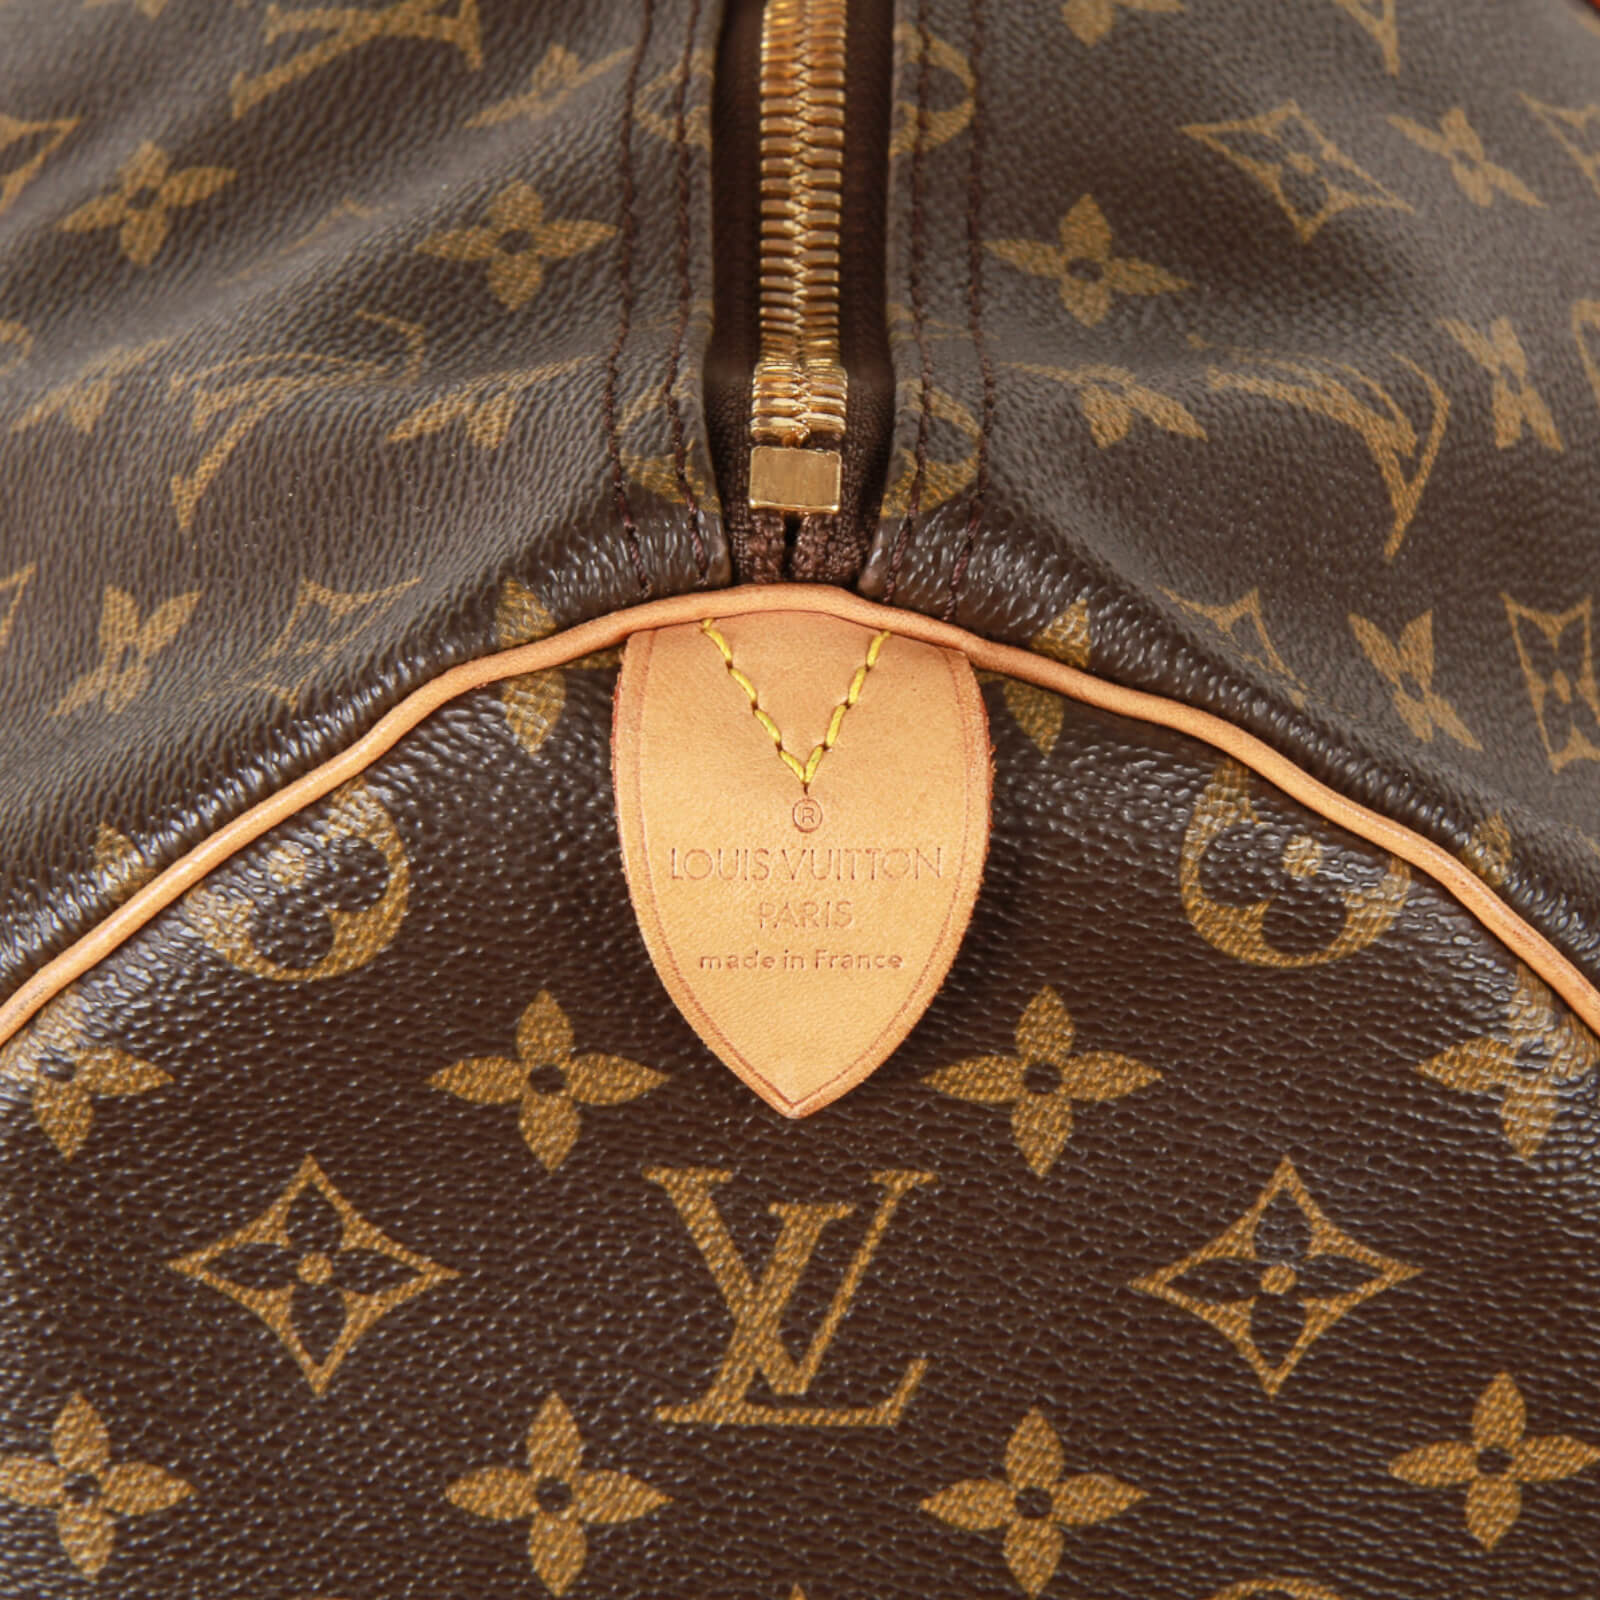 Louis Vuitton Keepall Travel Bag 50 cm in custom brown monogram